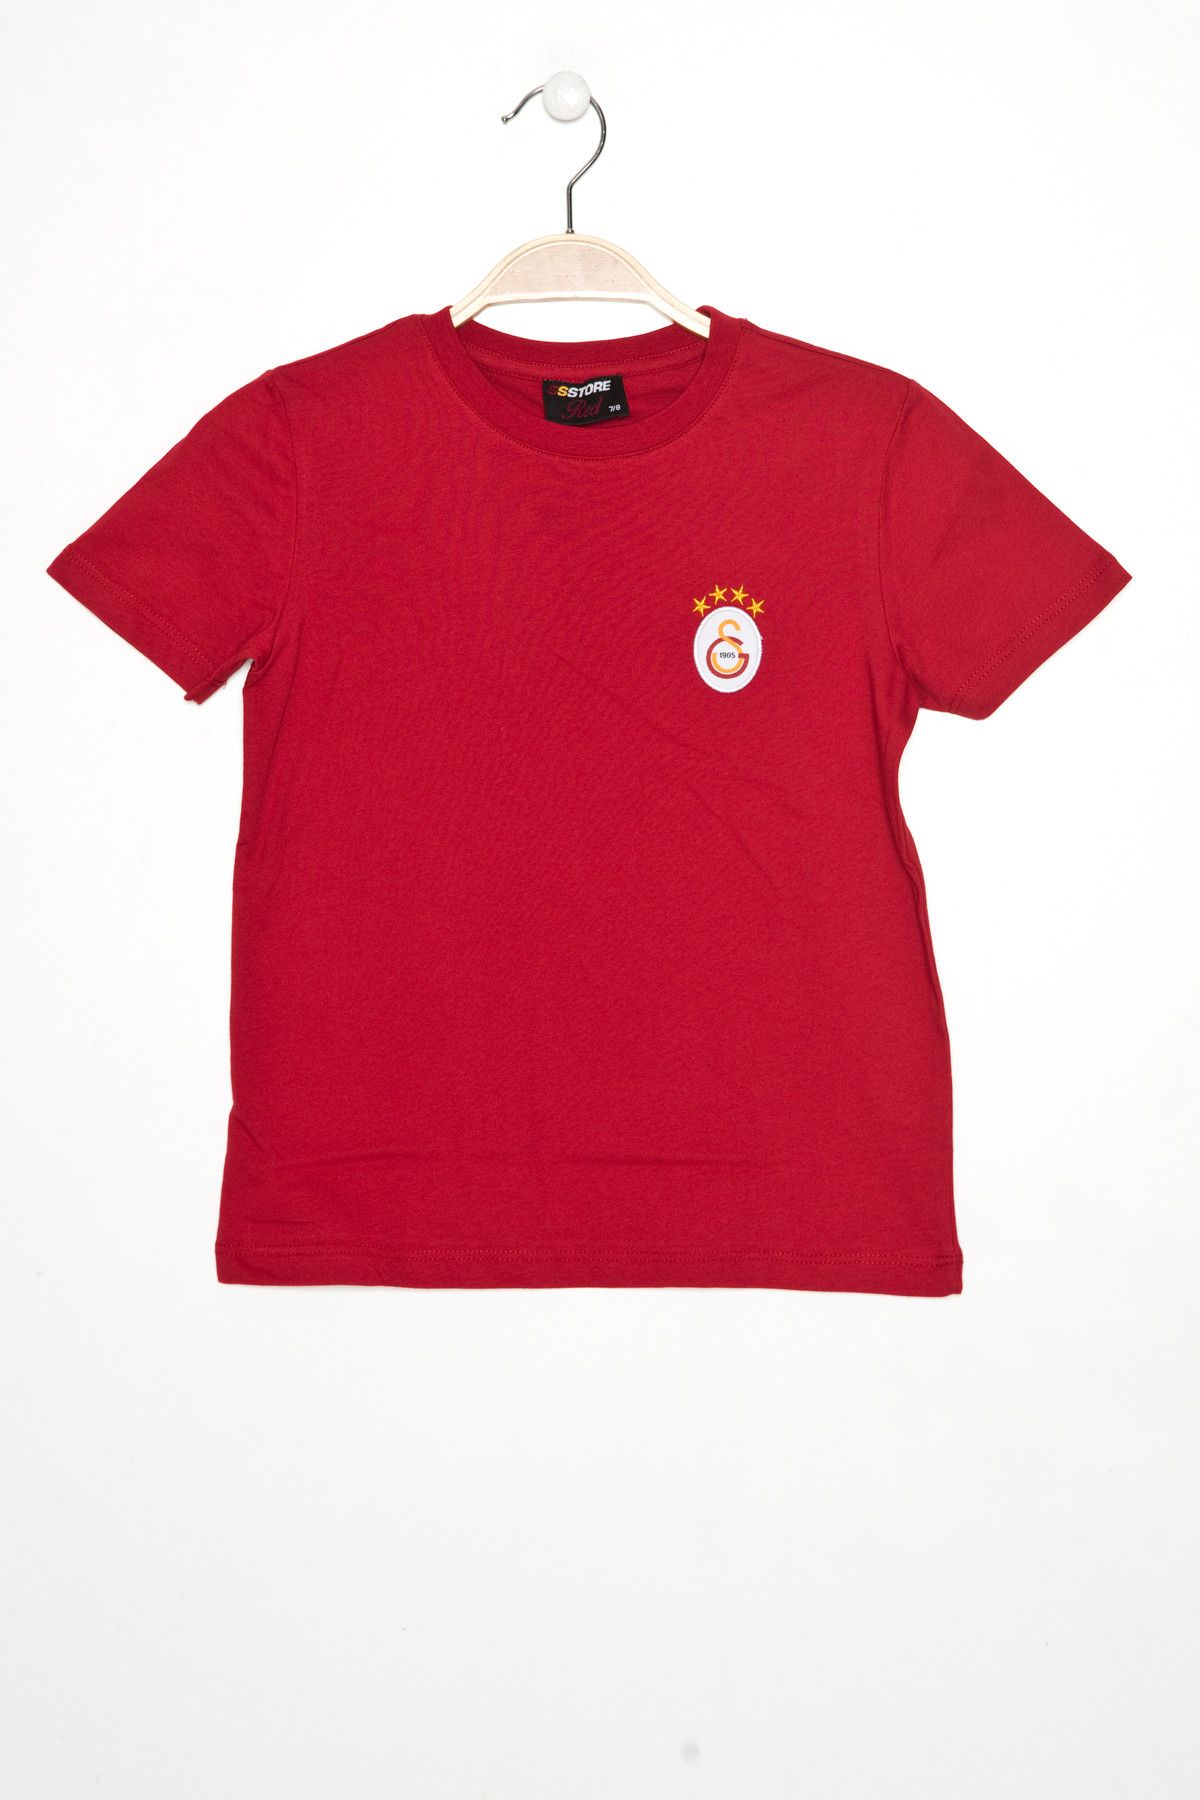 Galatasaray Galatasaray Kırmızı Çocuk T-Shirt K023-C85682